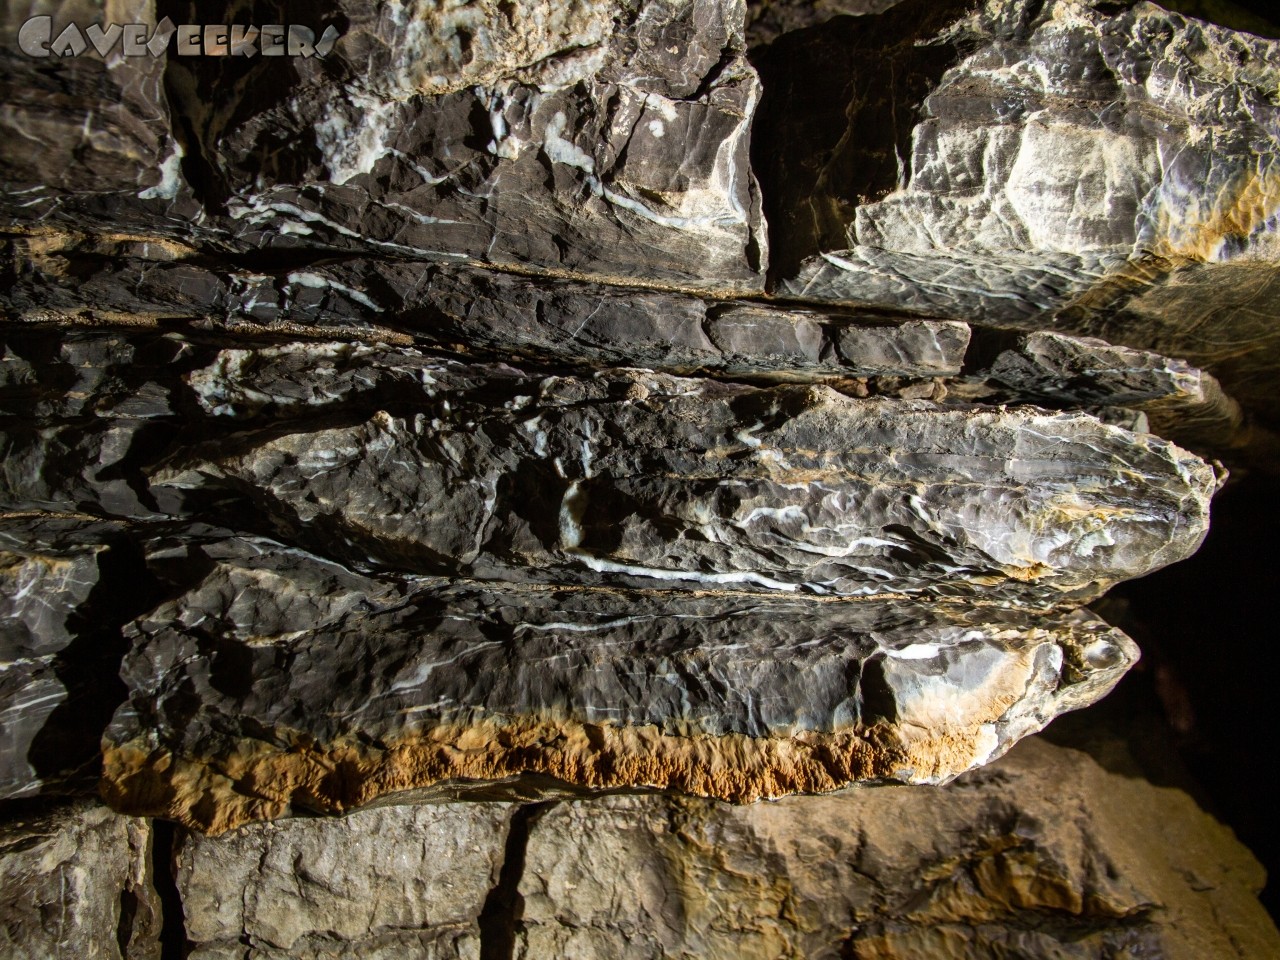 Rastgrabenhöhle